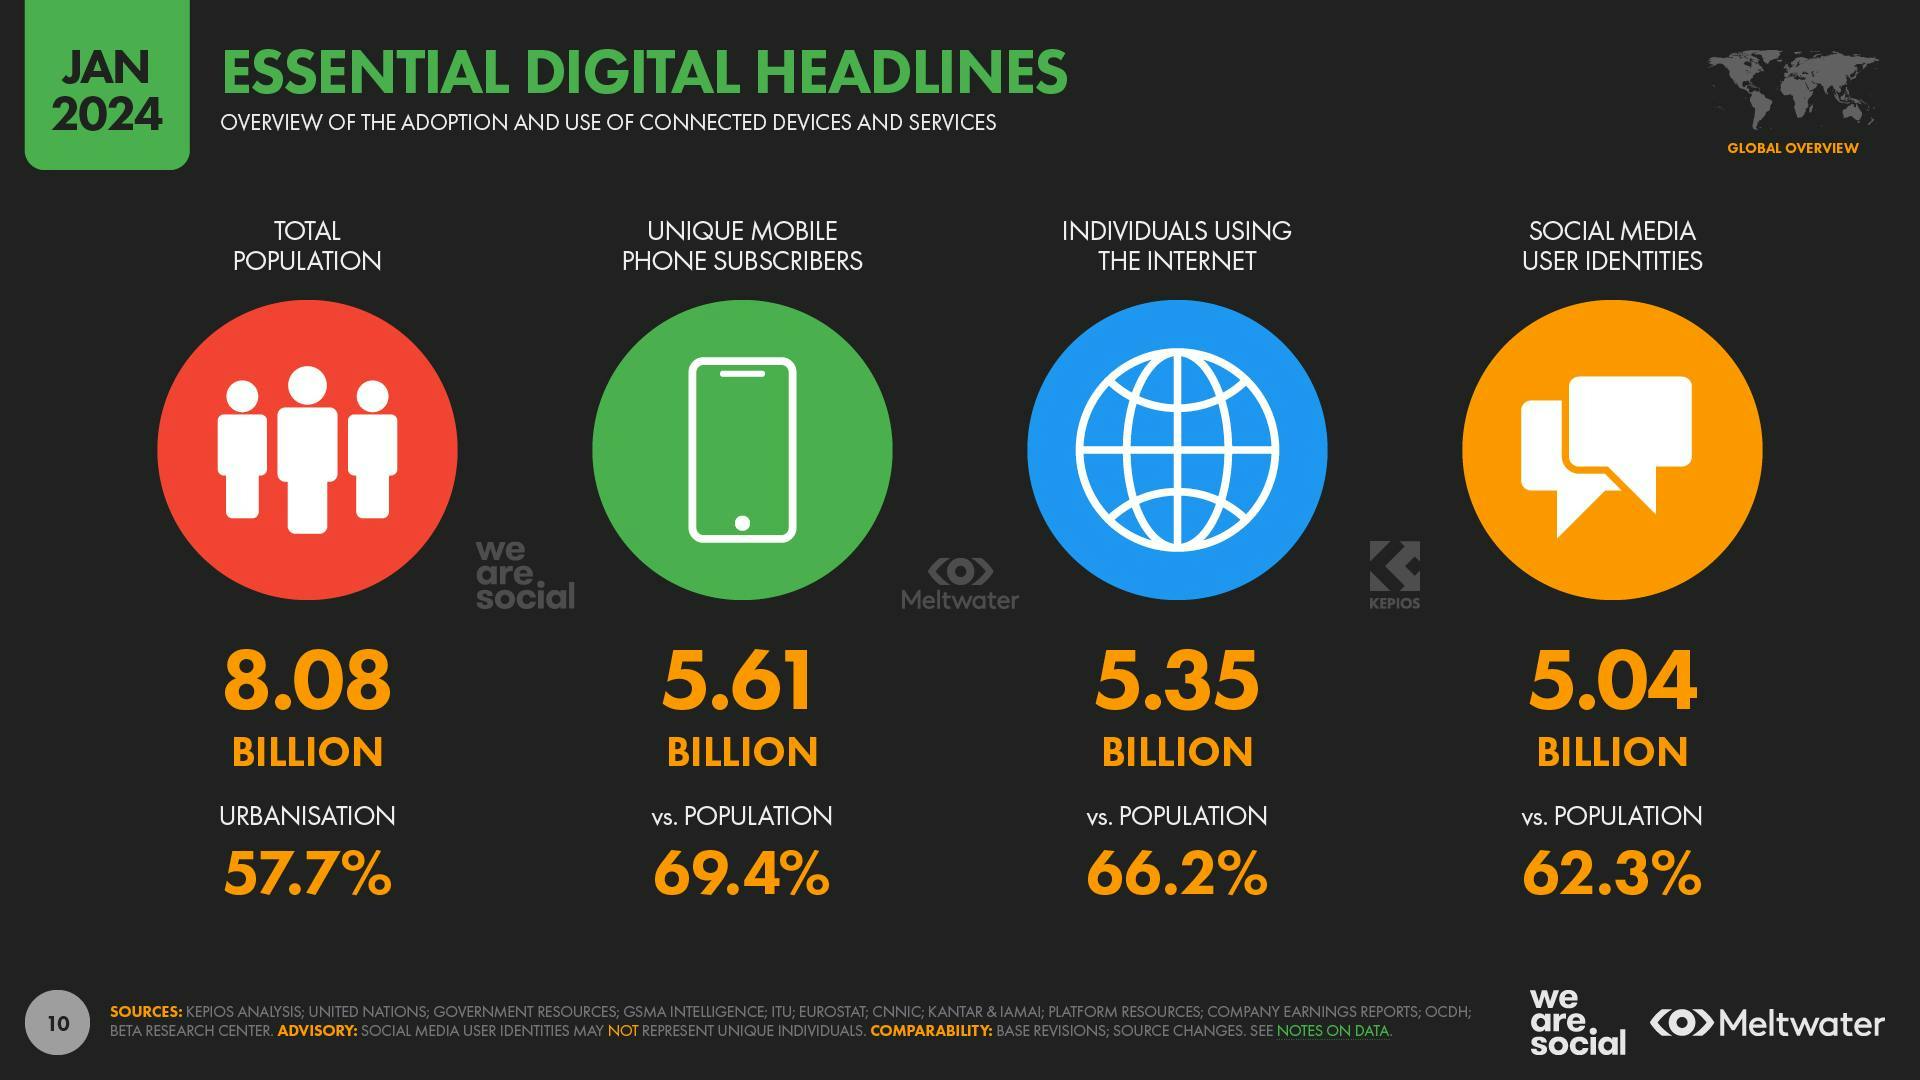 Essential digital headlines chart from the Digital 2024 Global Digital Overview report